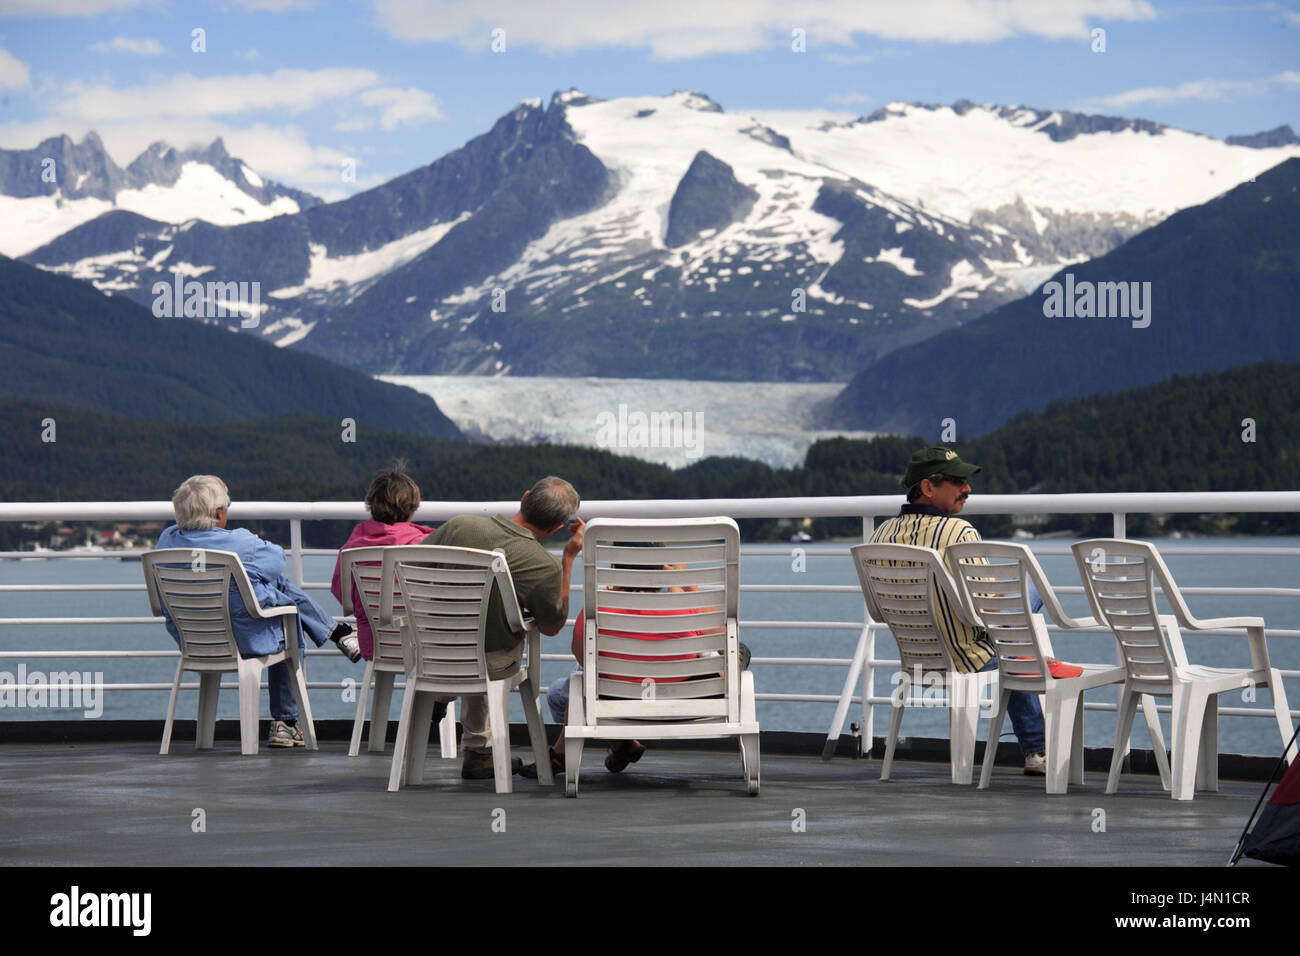 The USA, Alaska, ferry, deck, passengers, sit, back view, Mendenhall glacier, coast, sea, Stock Photo